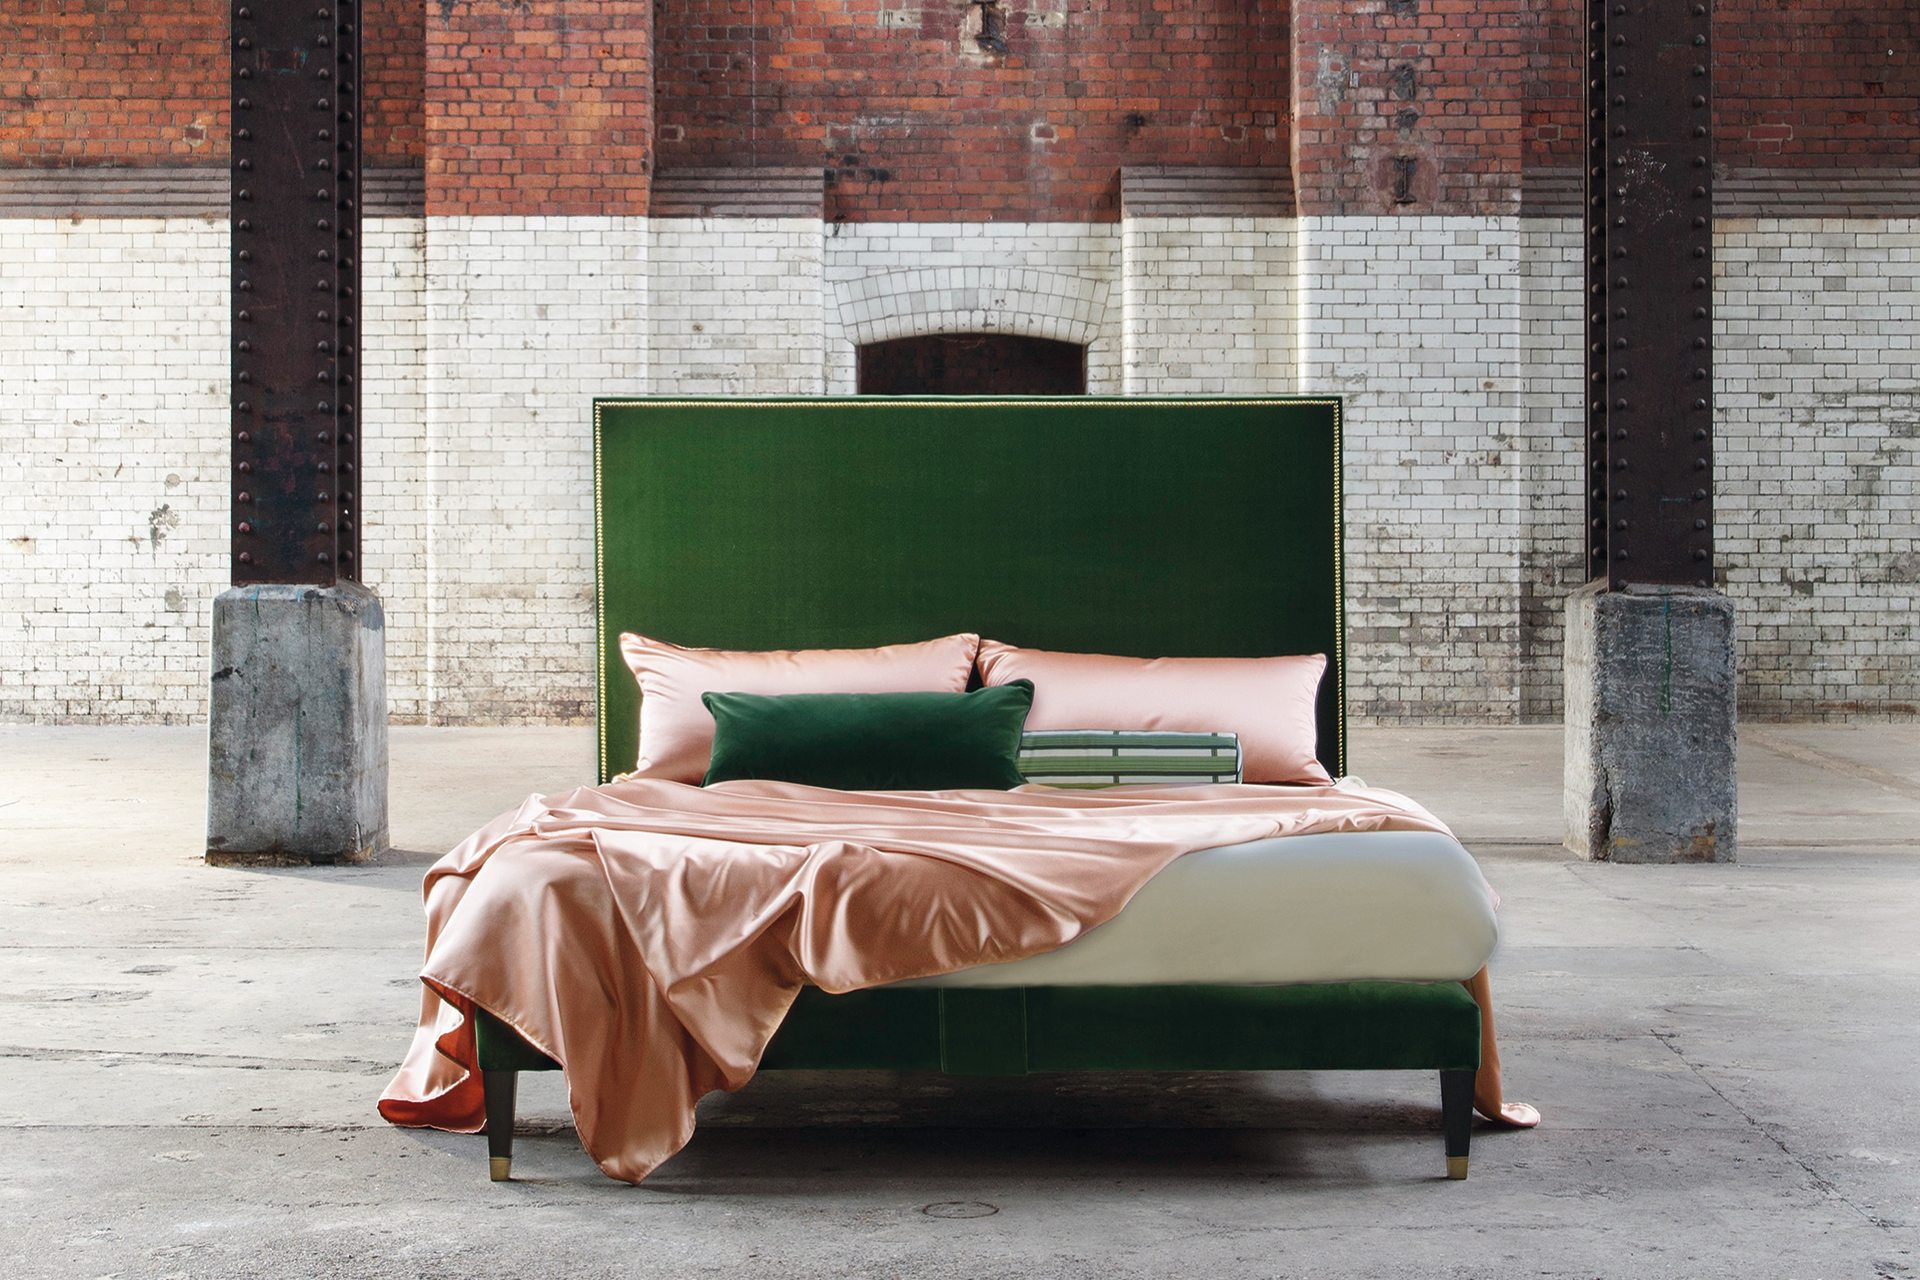 Luxury Louis Vuitton Bedding Set Home Decor - Trends Bedding